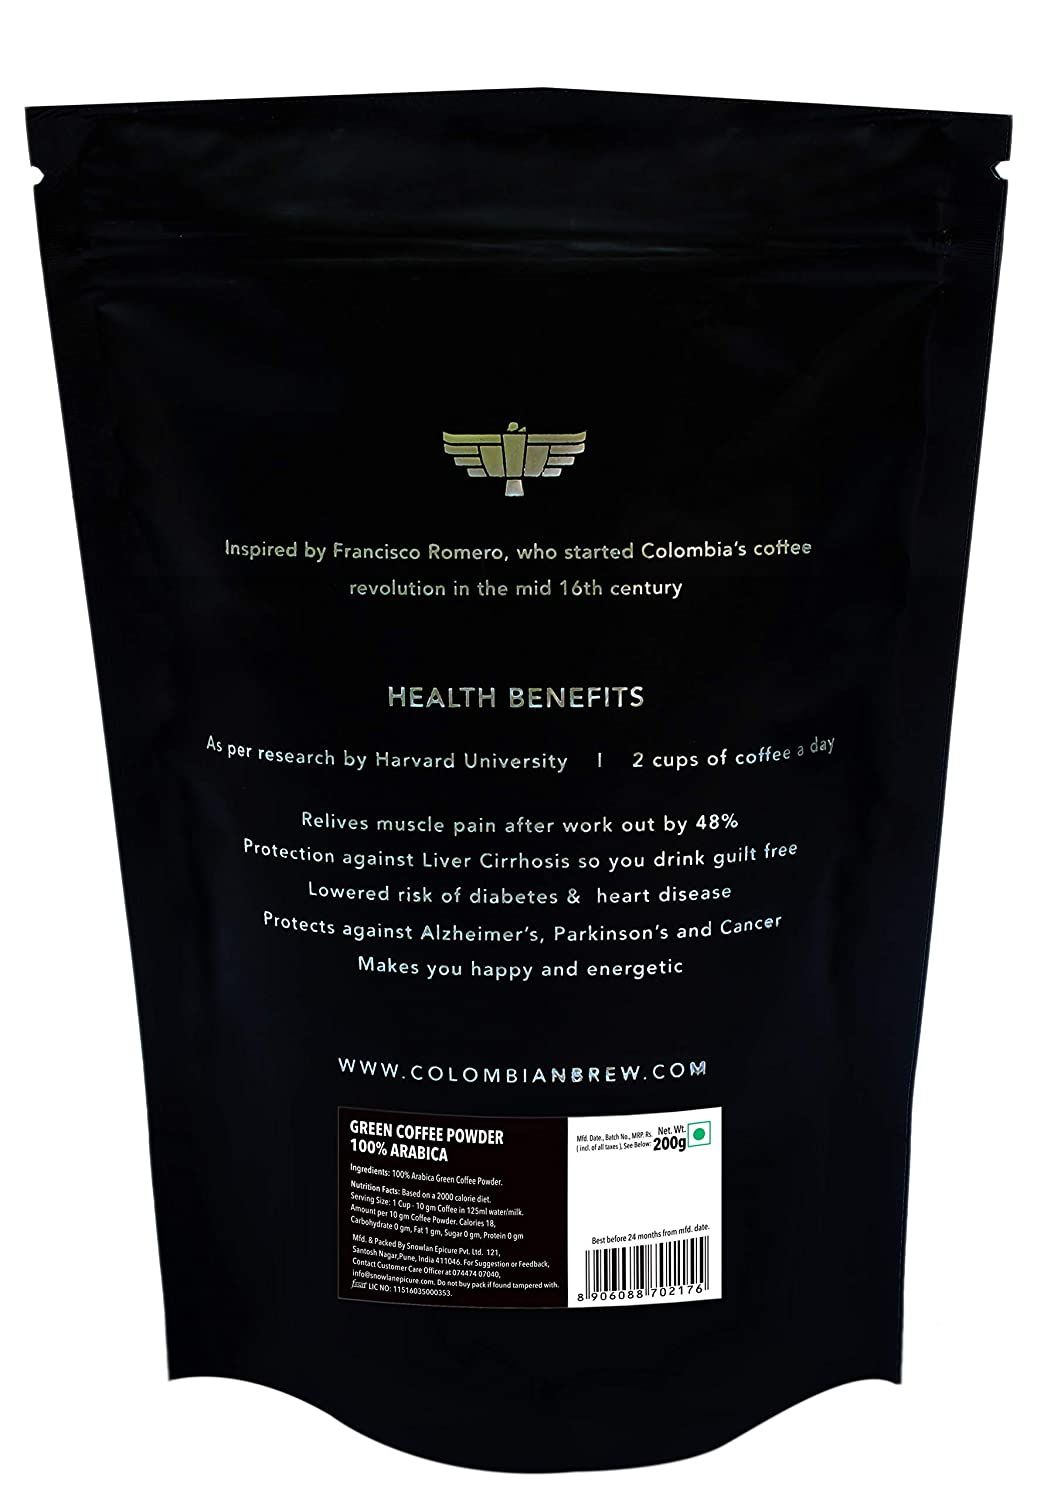 Colombian Brew Coffee 100% Arabica Green Coffee Beans Powder Image